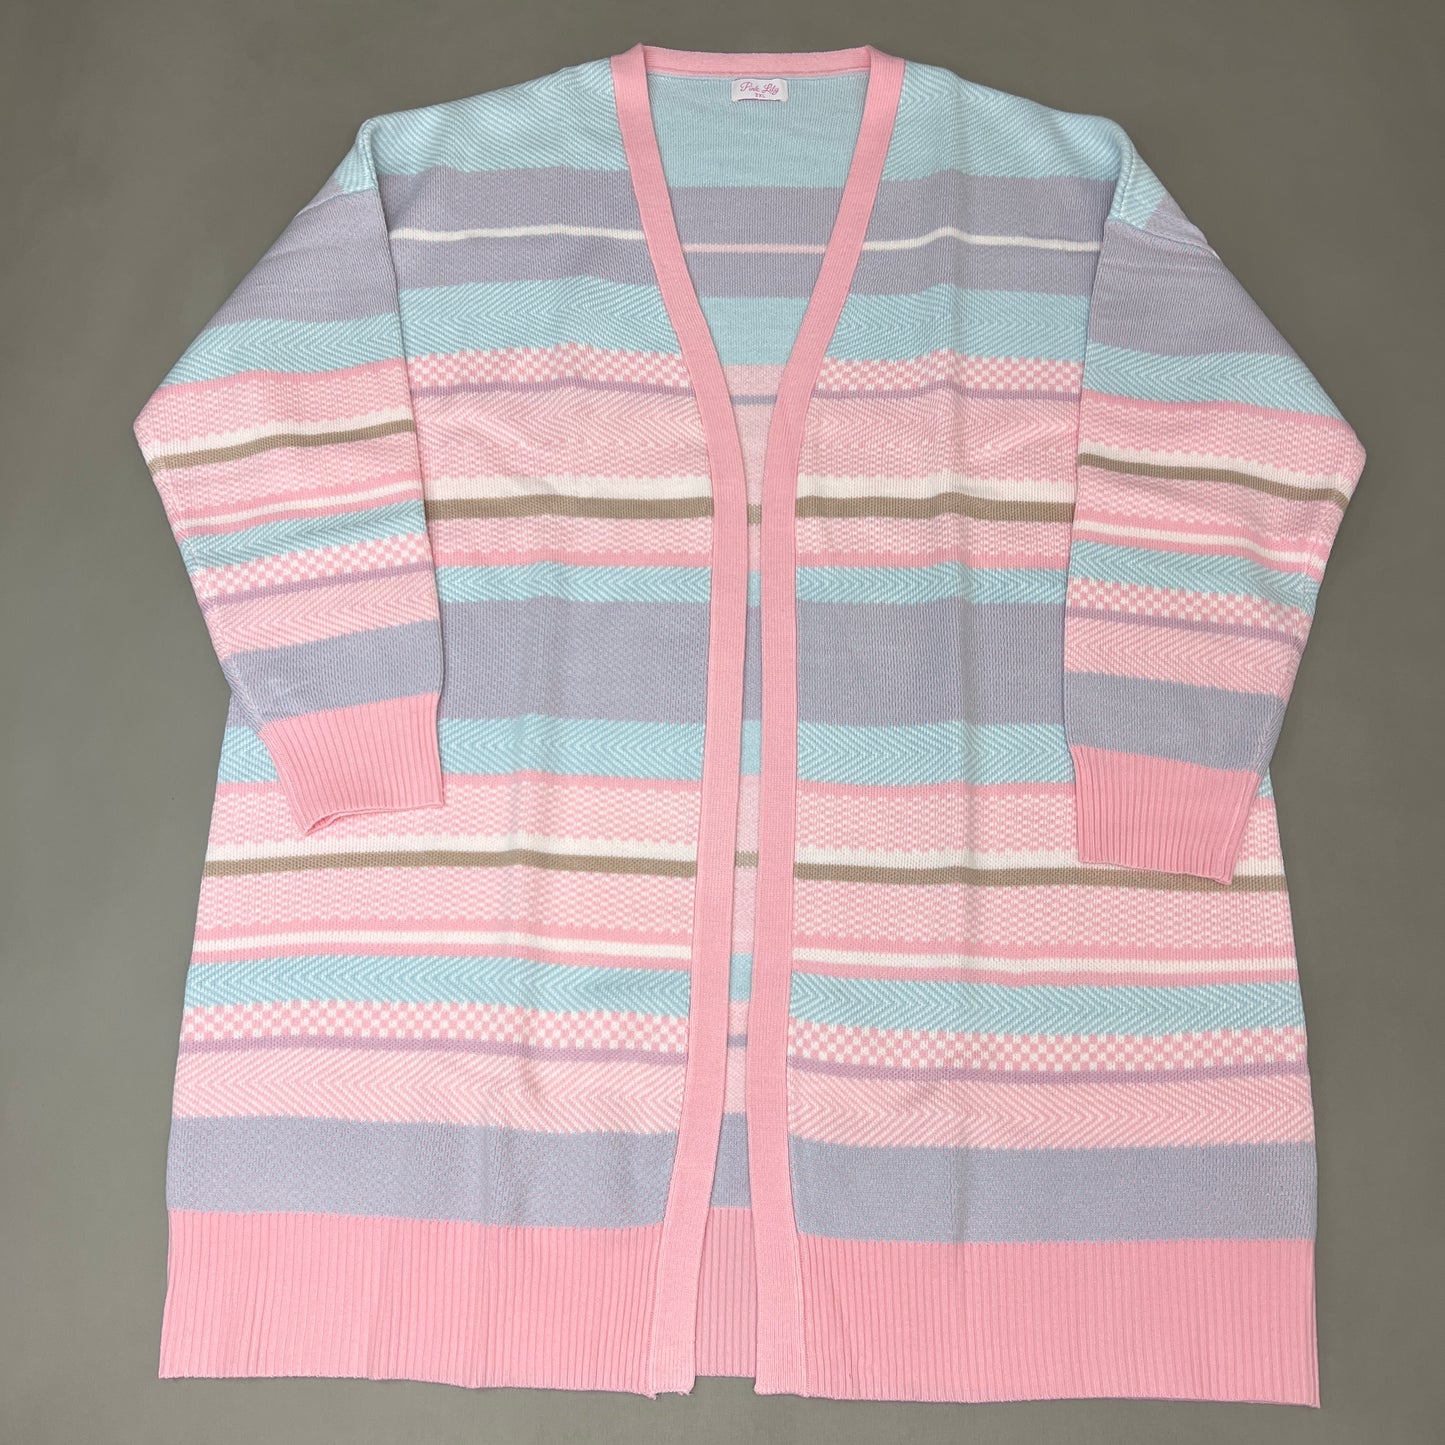 PINK LILY Multi-colored Striped Sweater Cardigan Women's Sz XXL PL930 (New)